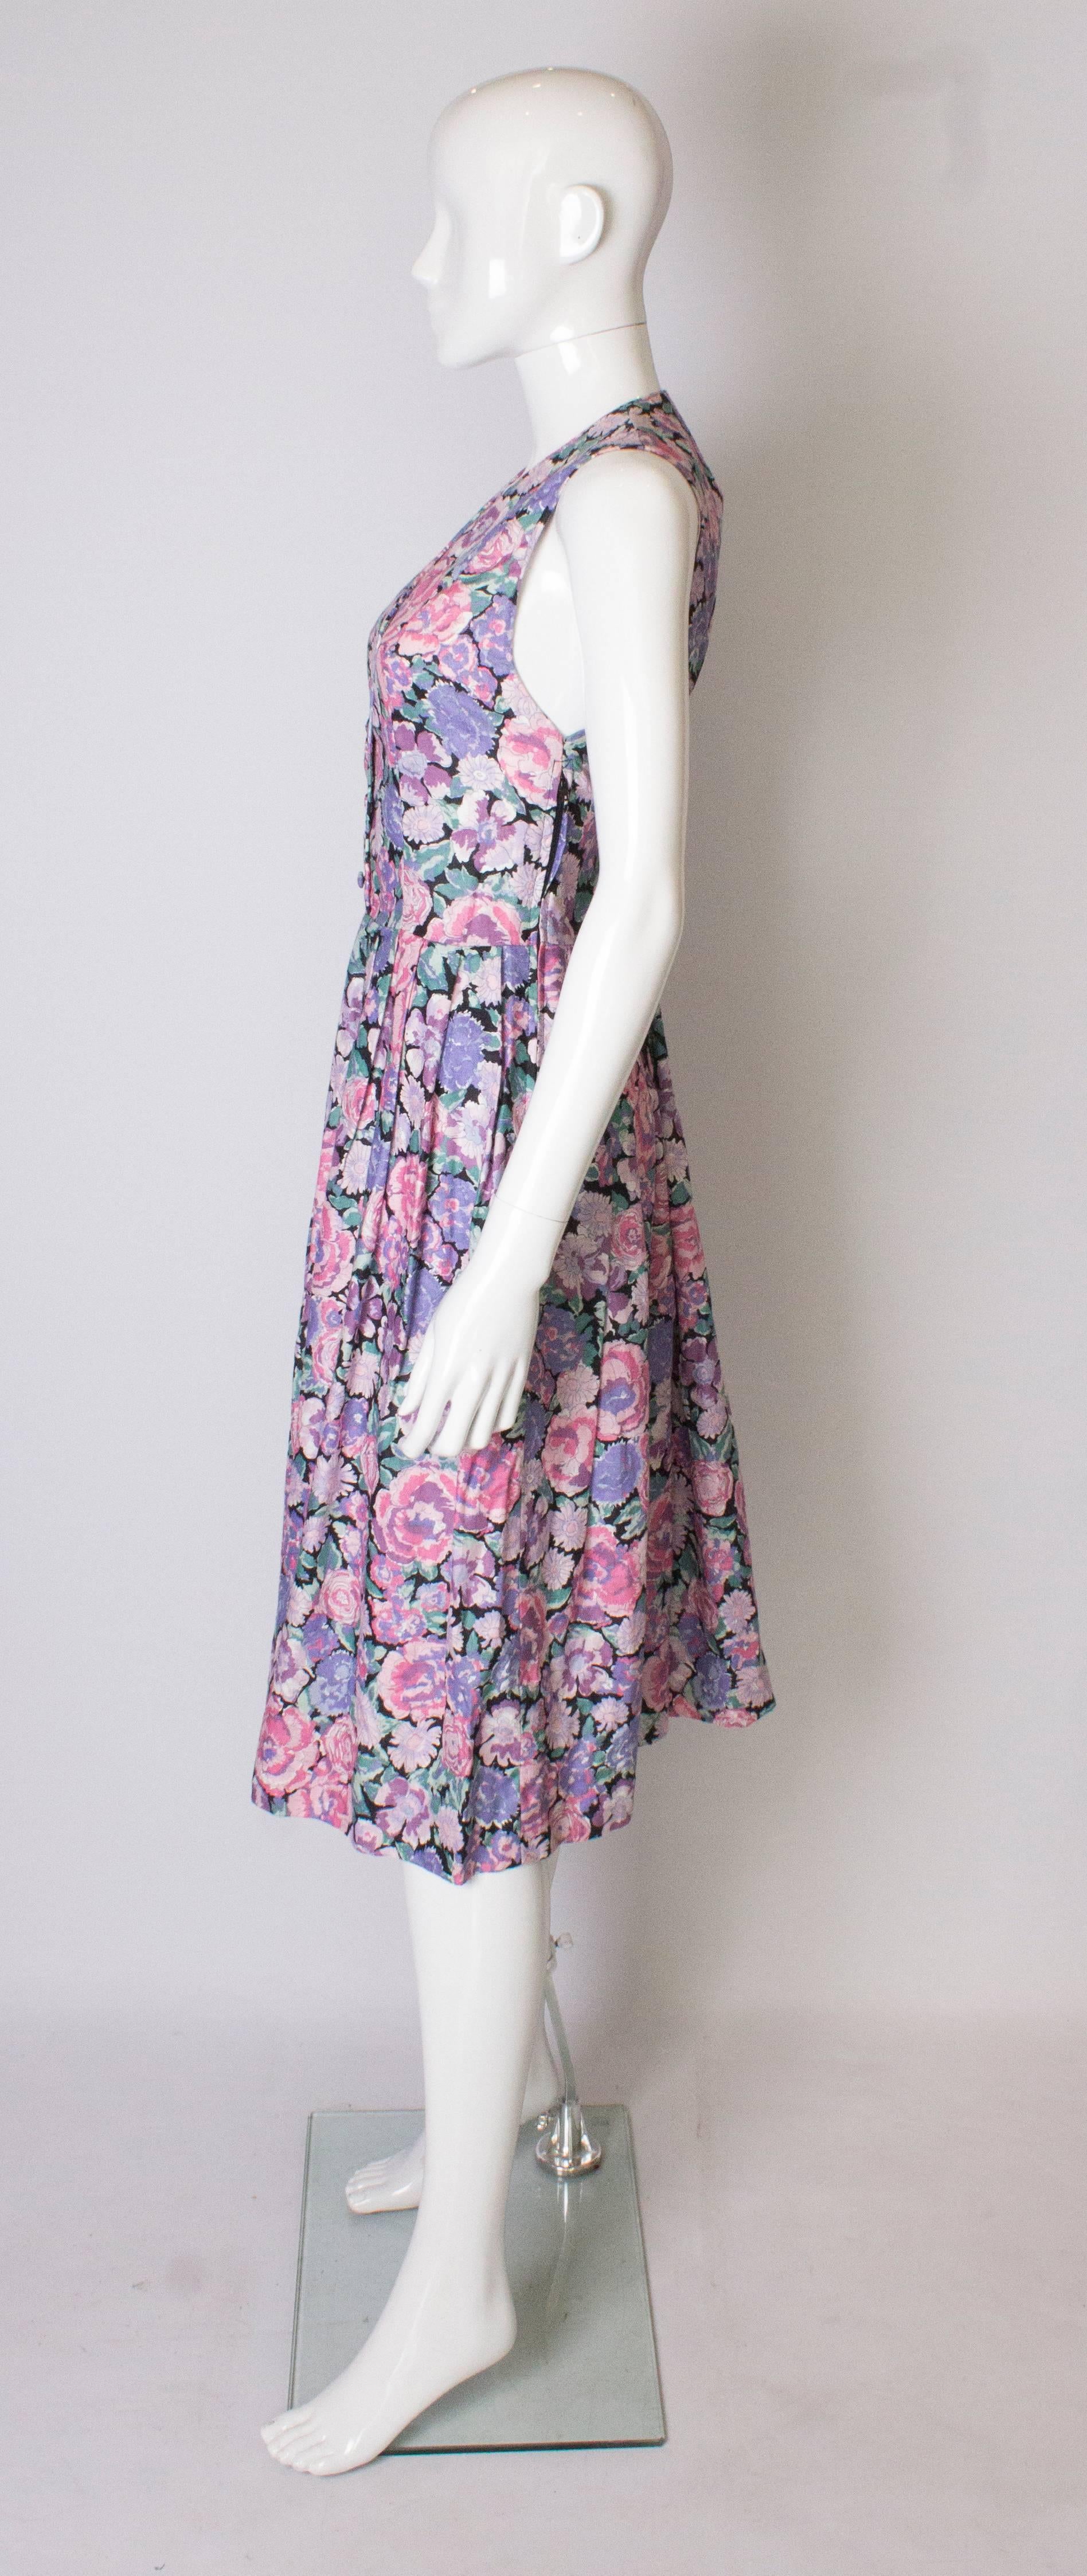 laura ashley dresses vintage